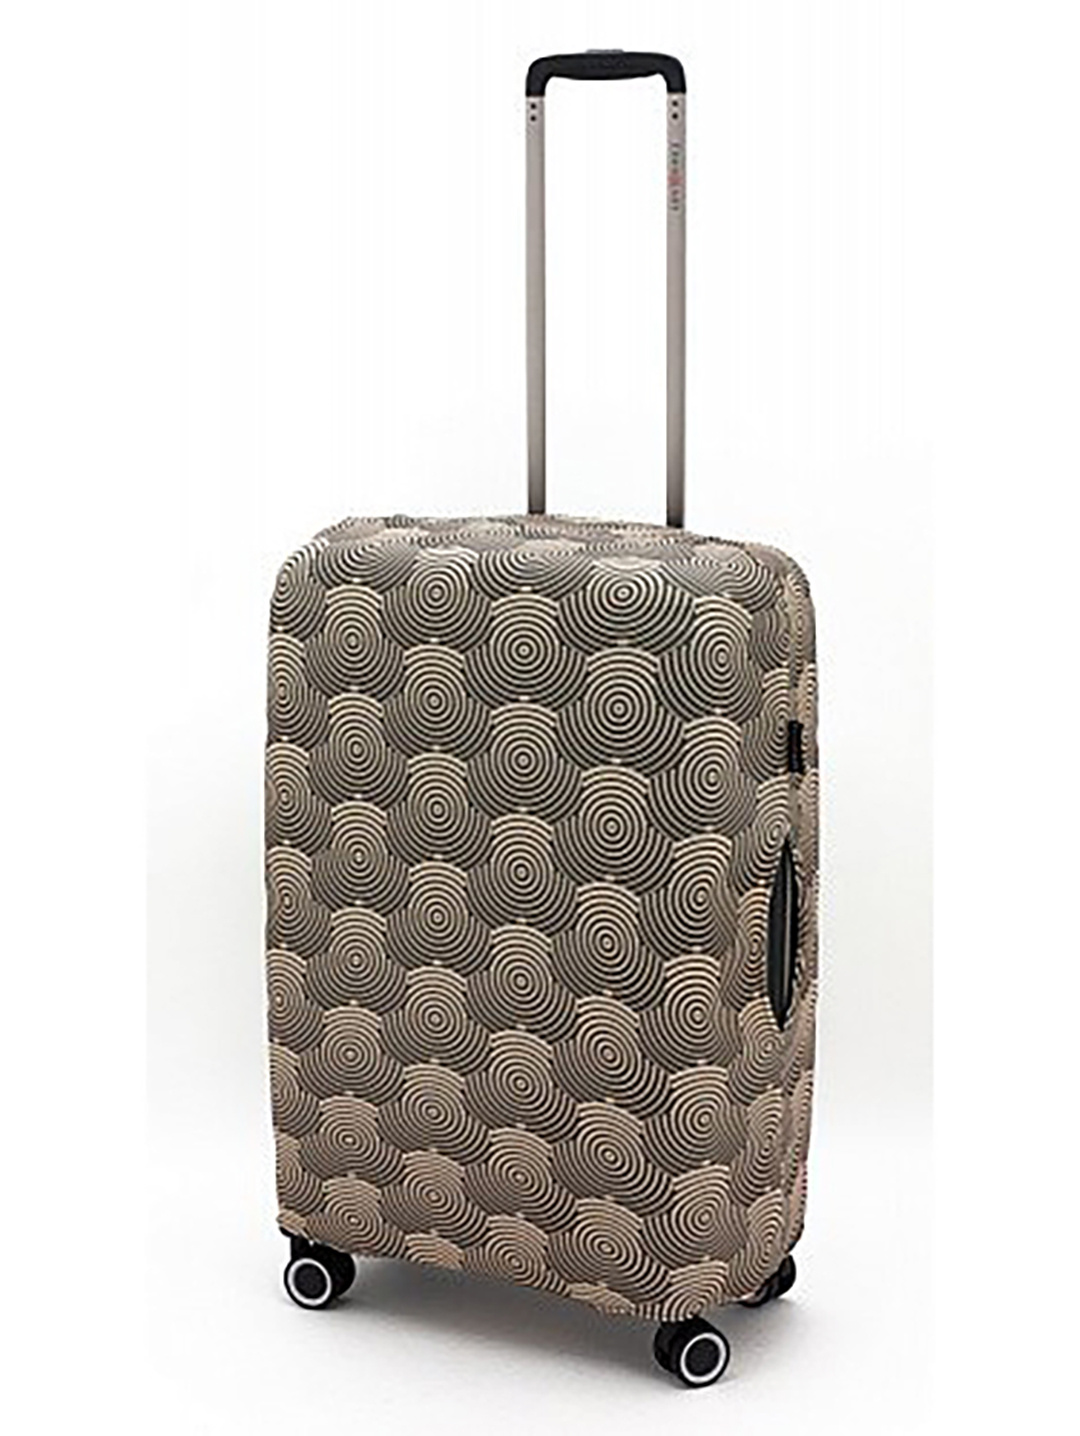 Фото Чехол для среднего чемодана TAN PATTERN Чехлы для чемоданов